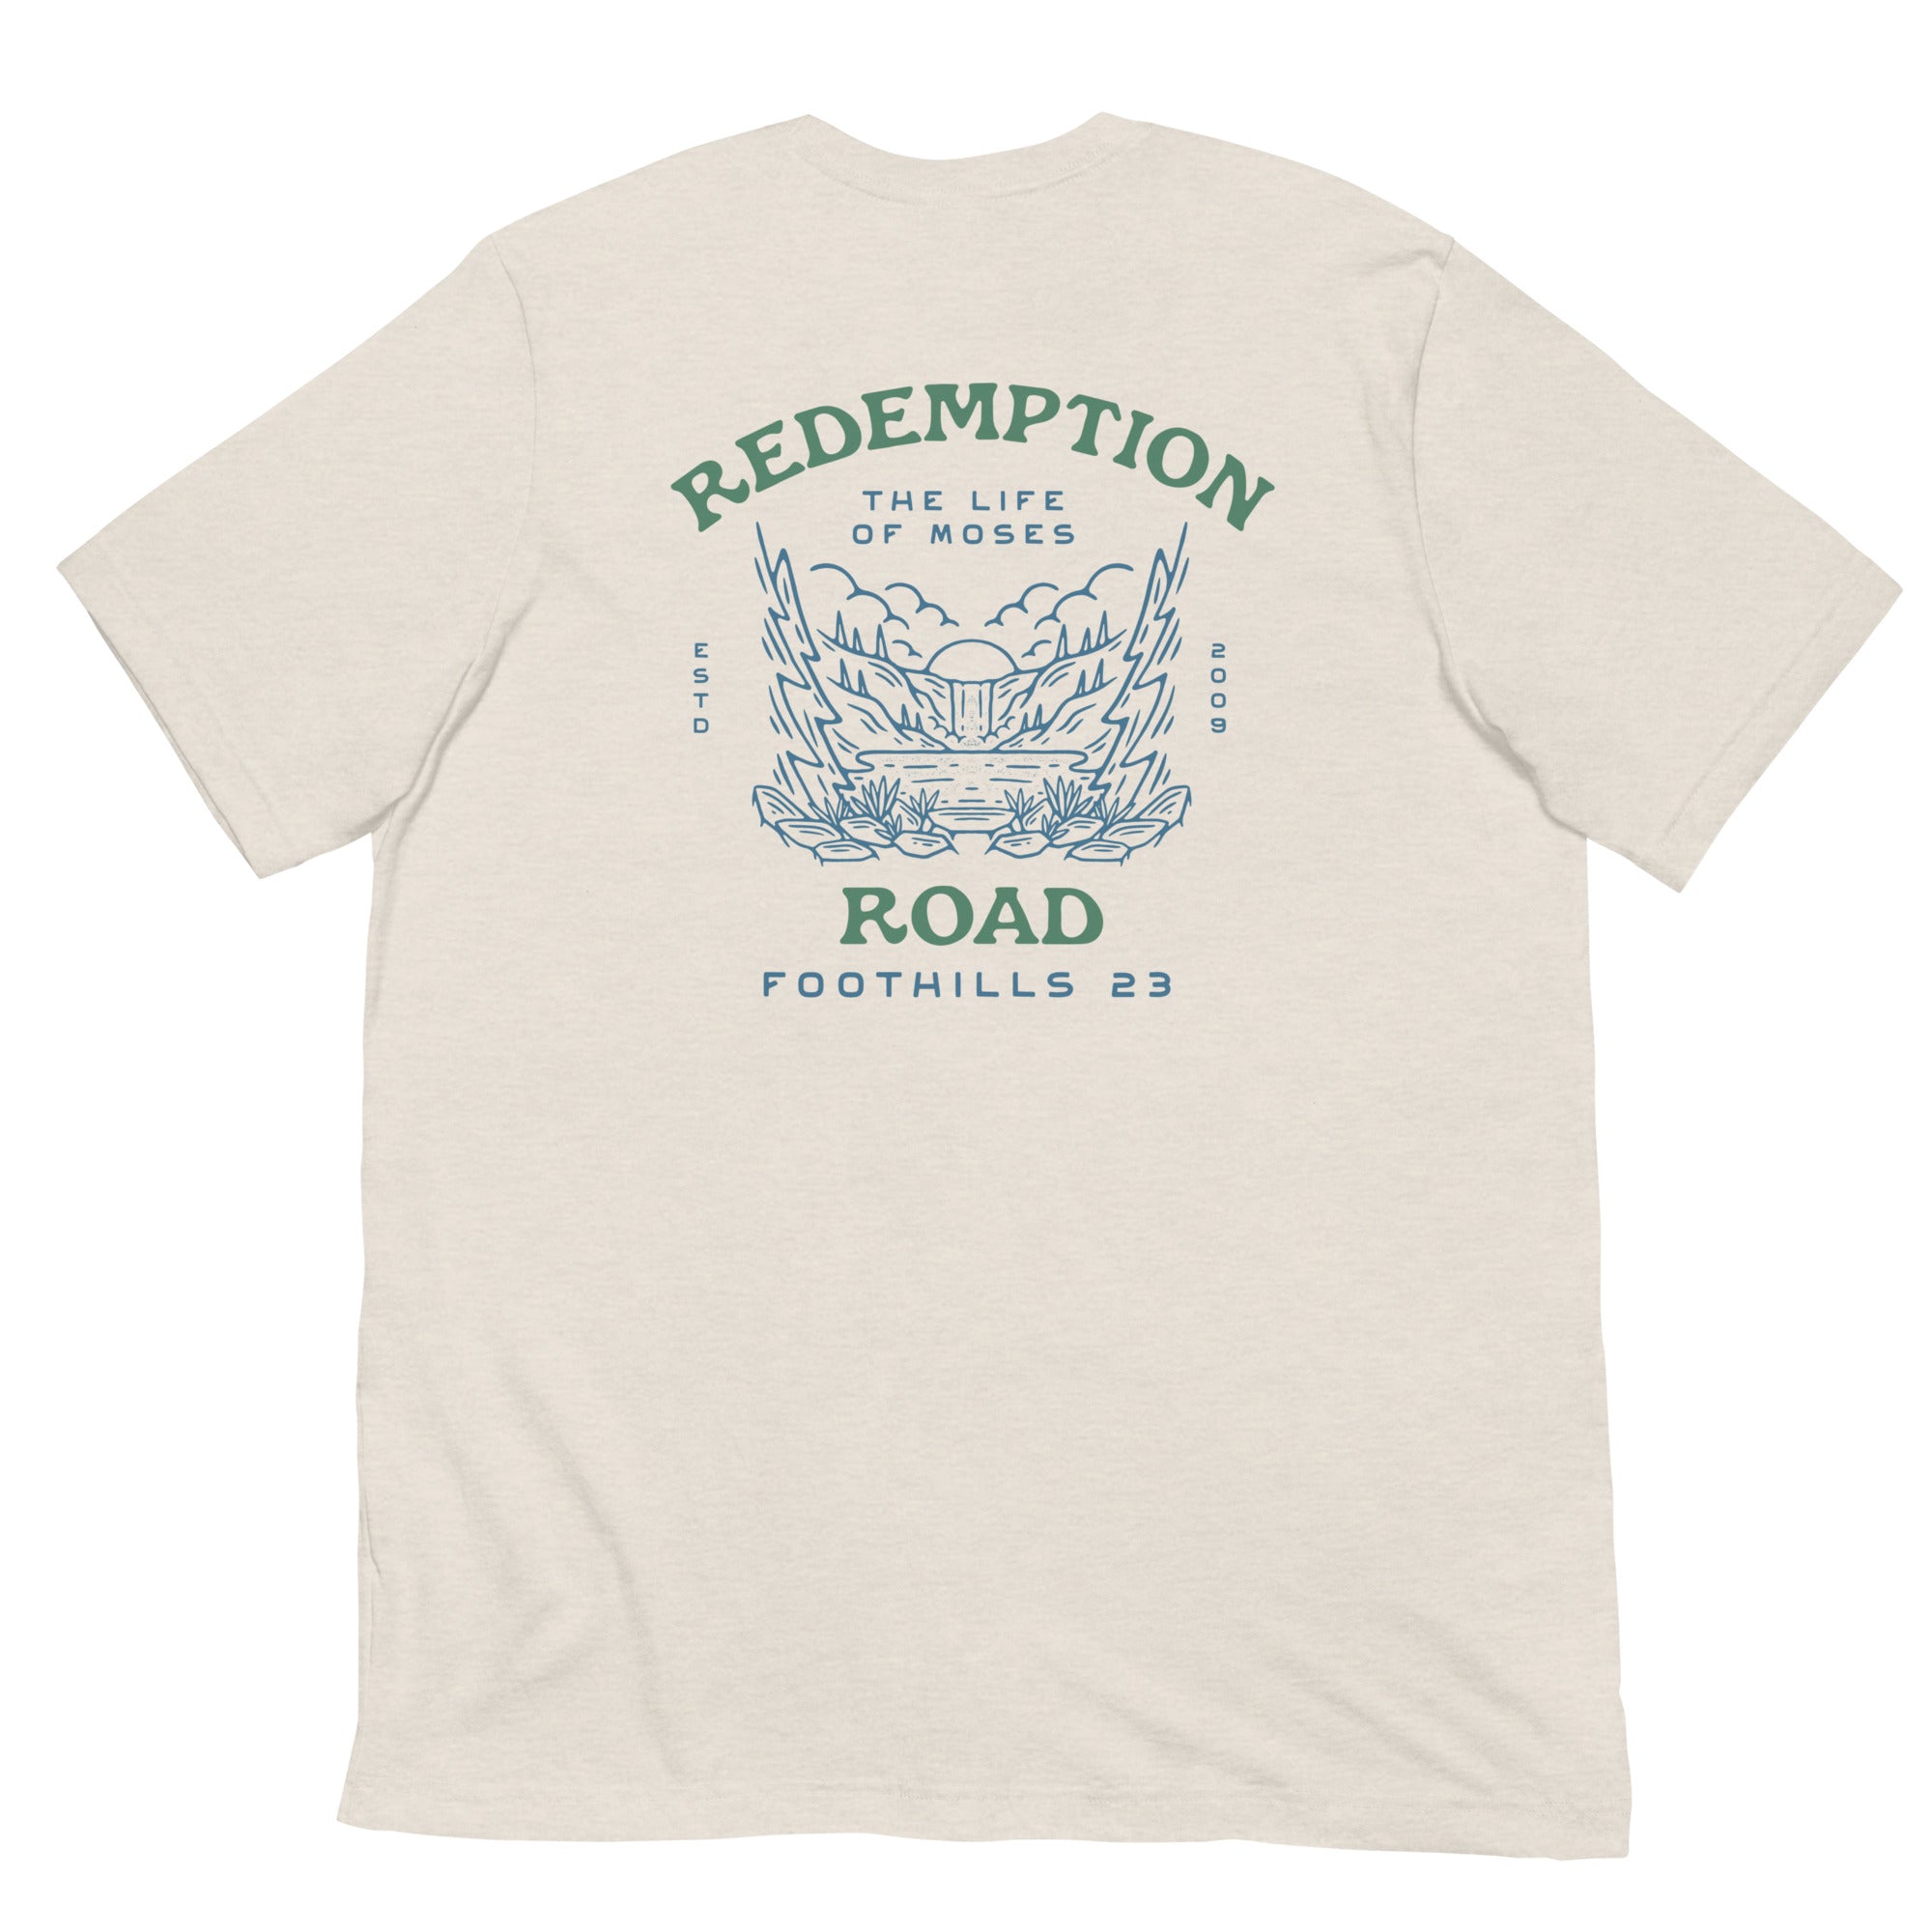 Redemption Road Short Sleeve - 1